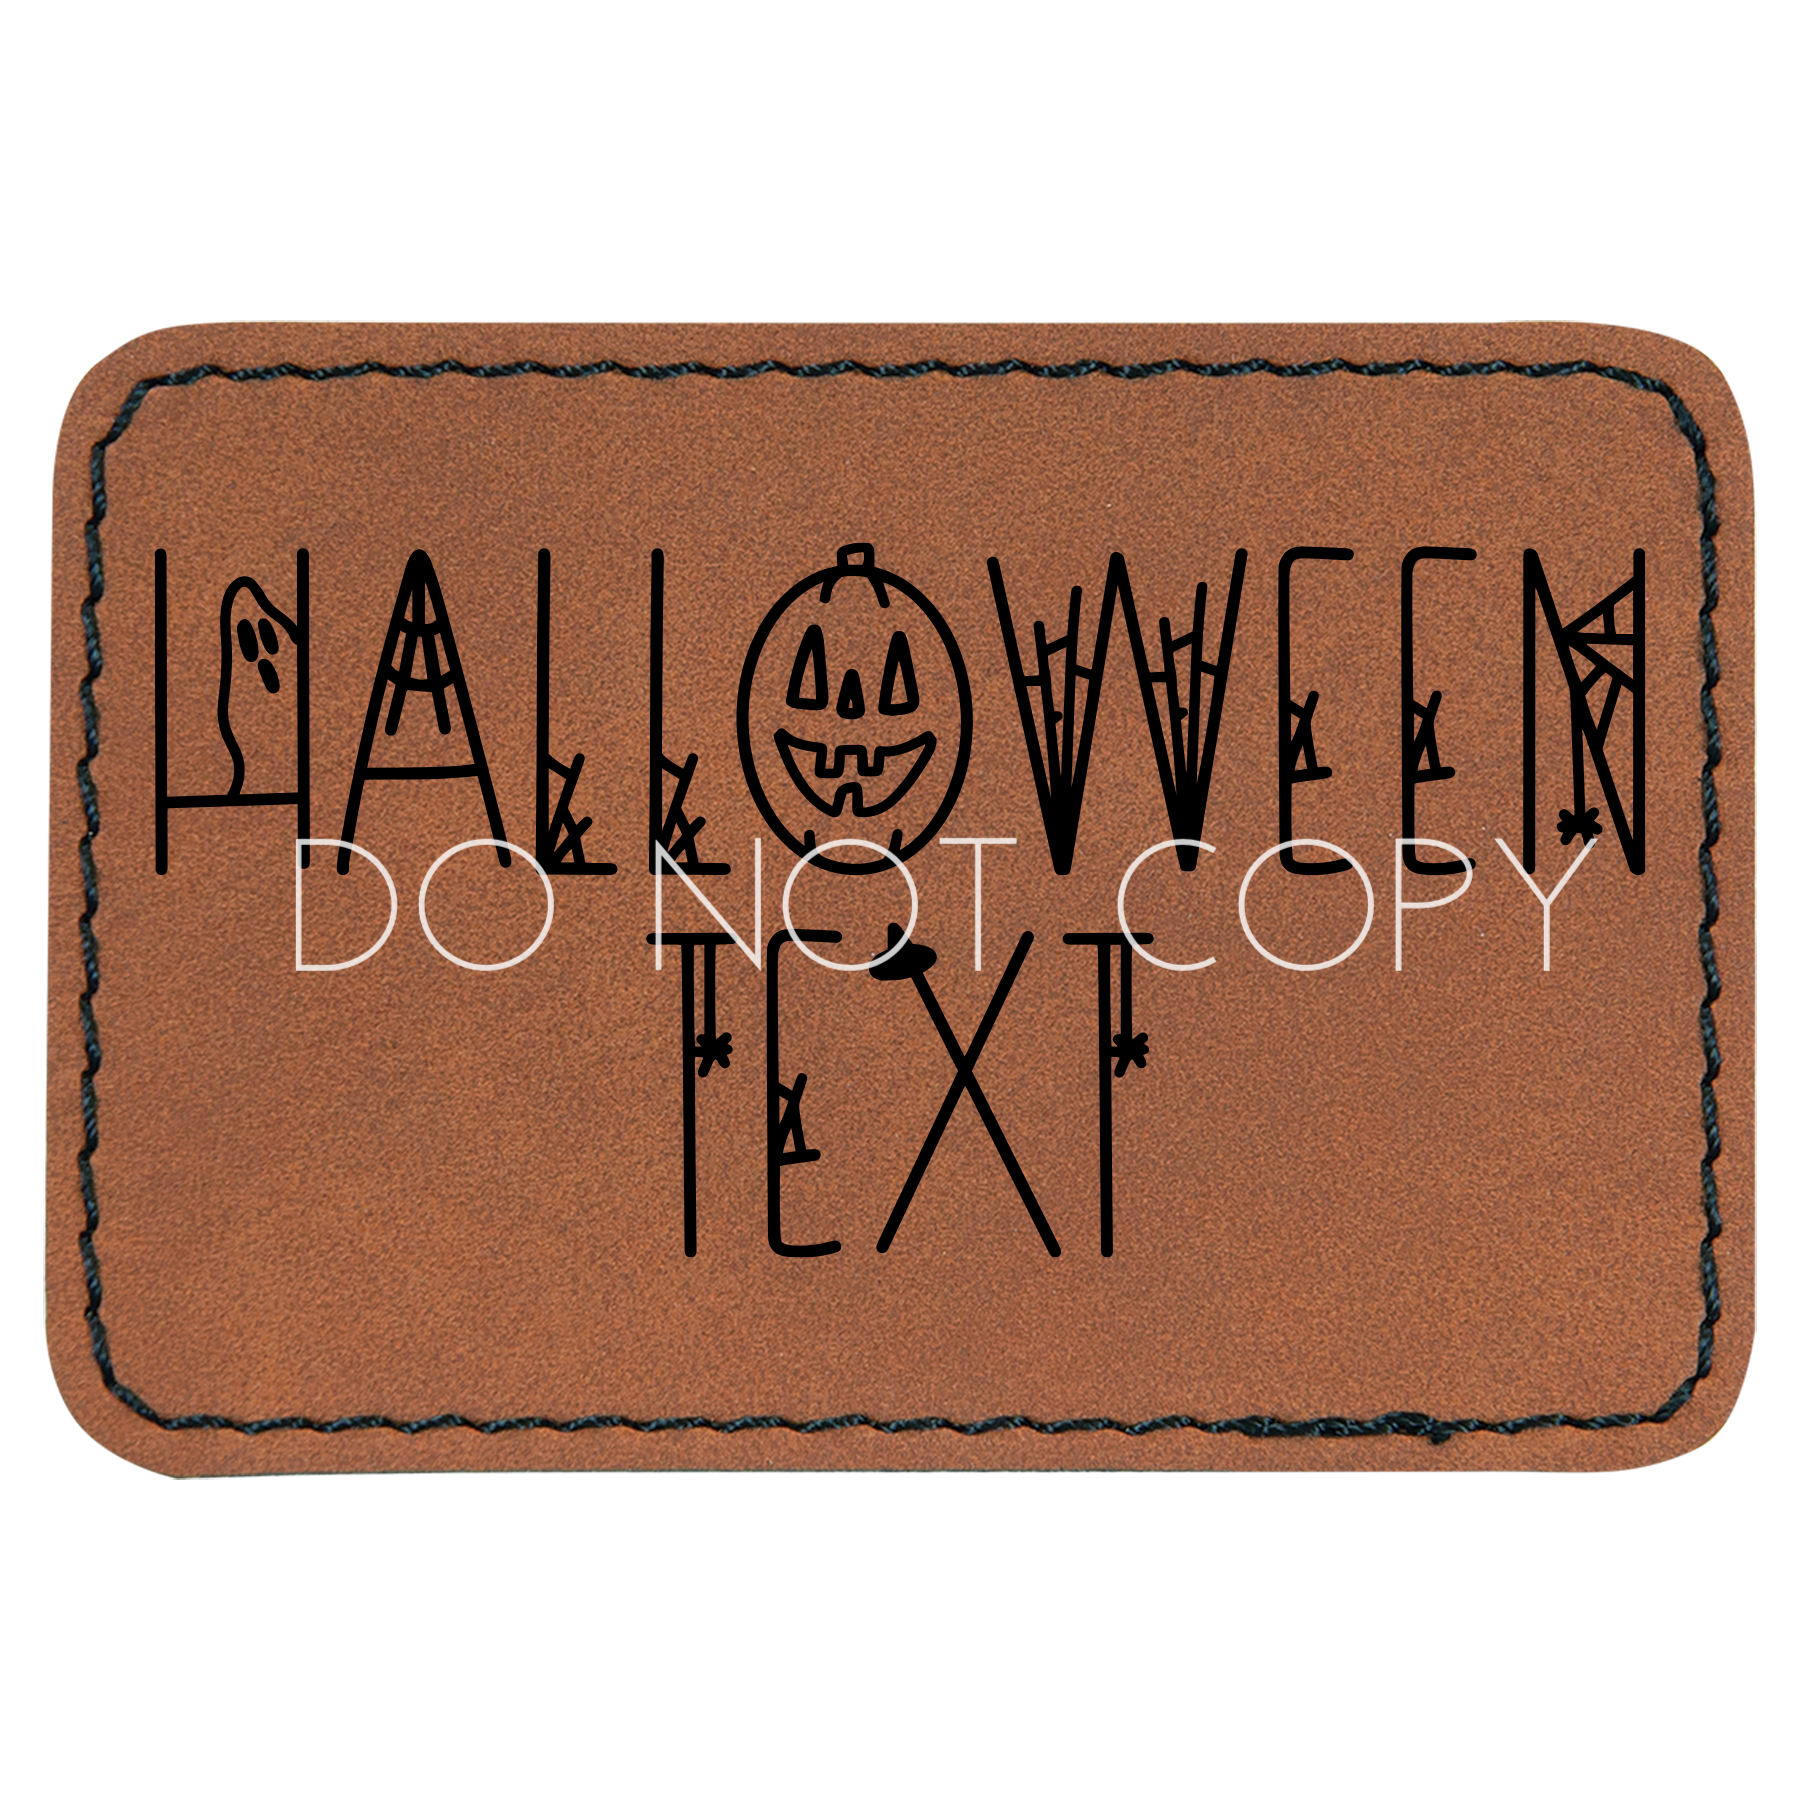 Halloween Font Custom Text Patch